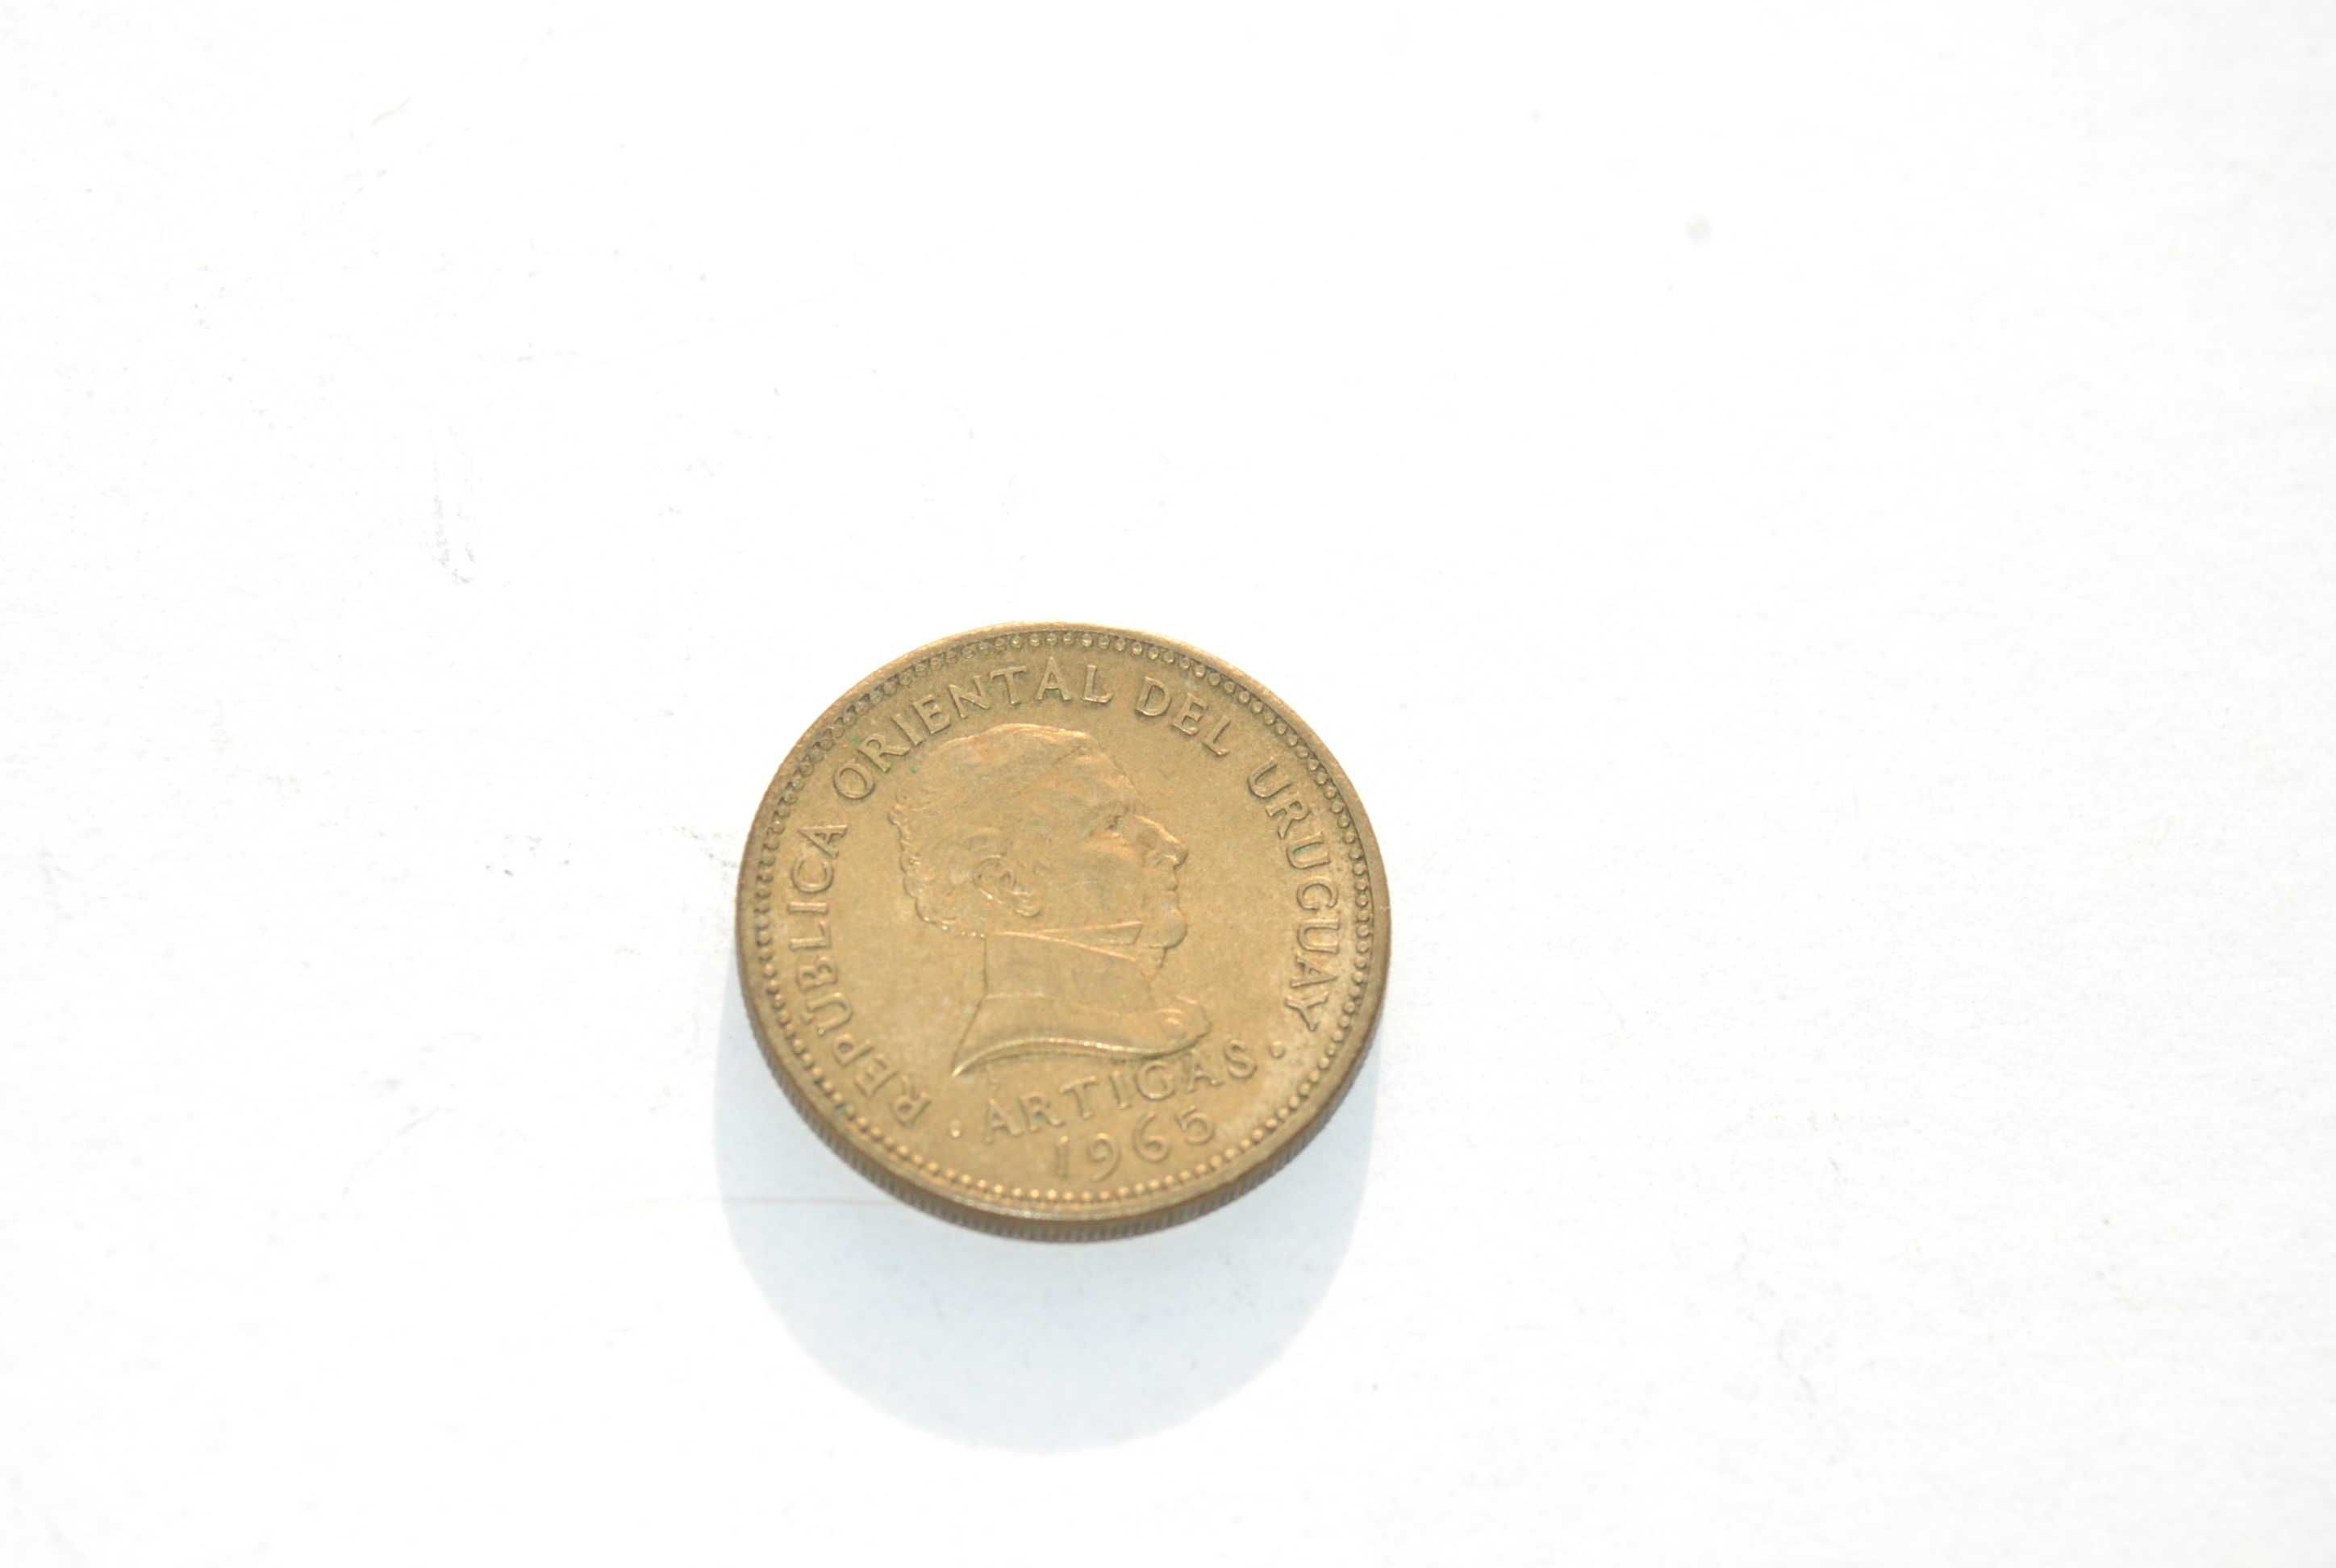 Stara moneta 1 peso Urugwaj 1965 unikat antyk kolekcjonerski